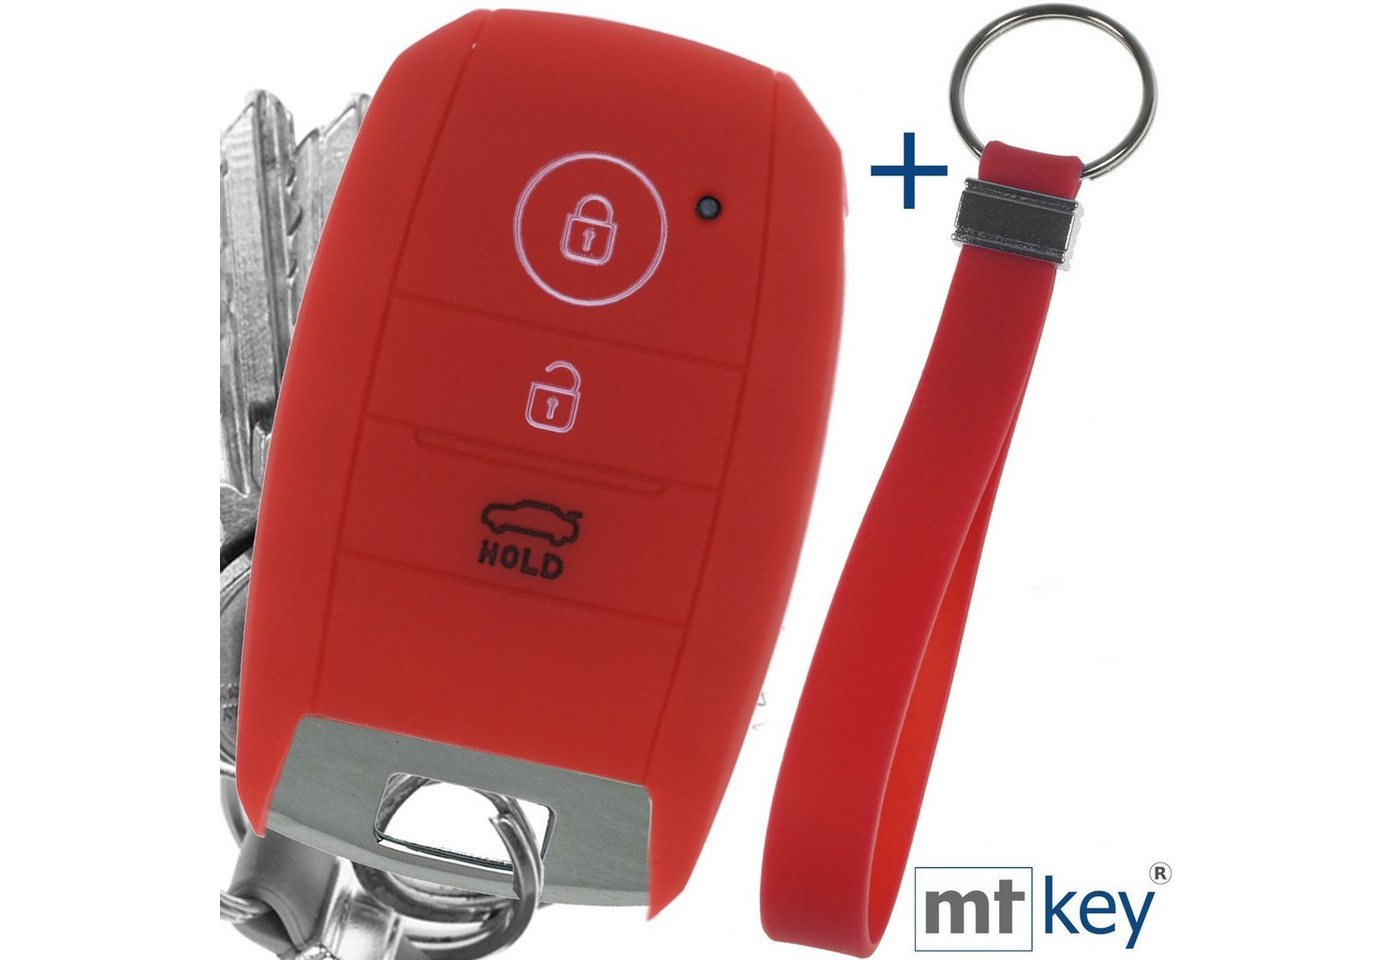 mt-key Schlüsseltasche Autoschlüssel Softcase Silikon Schutzhülle Rot mit Schlüsselband, für KIA Picantio Rio Ceed Soul Sportage Stonic 3 Tasten KEYLESS von mt-key